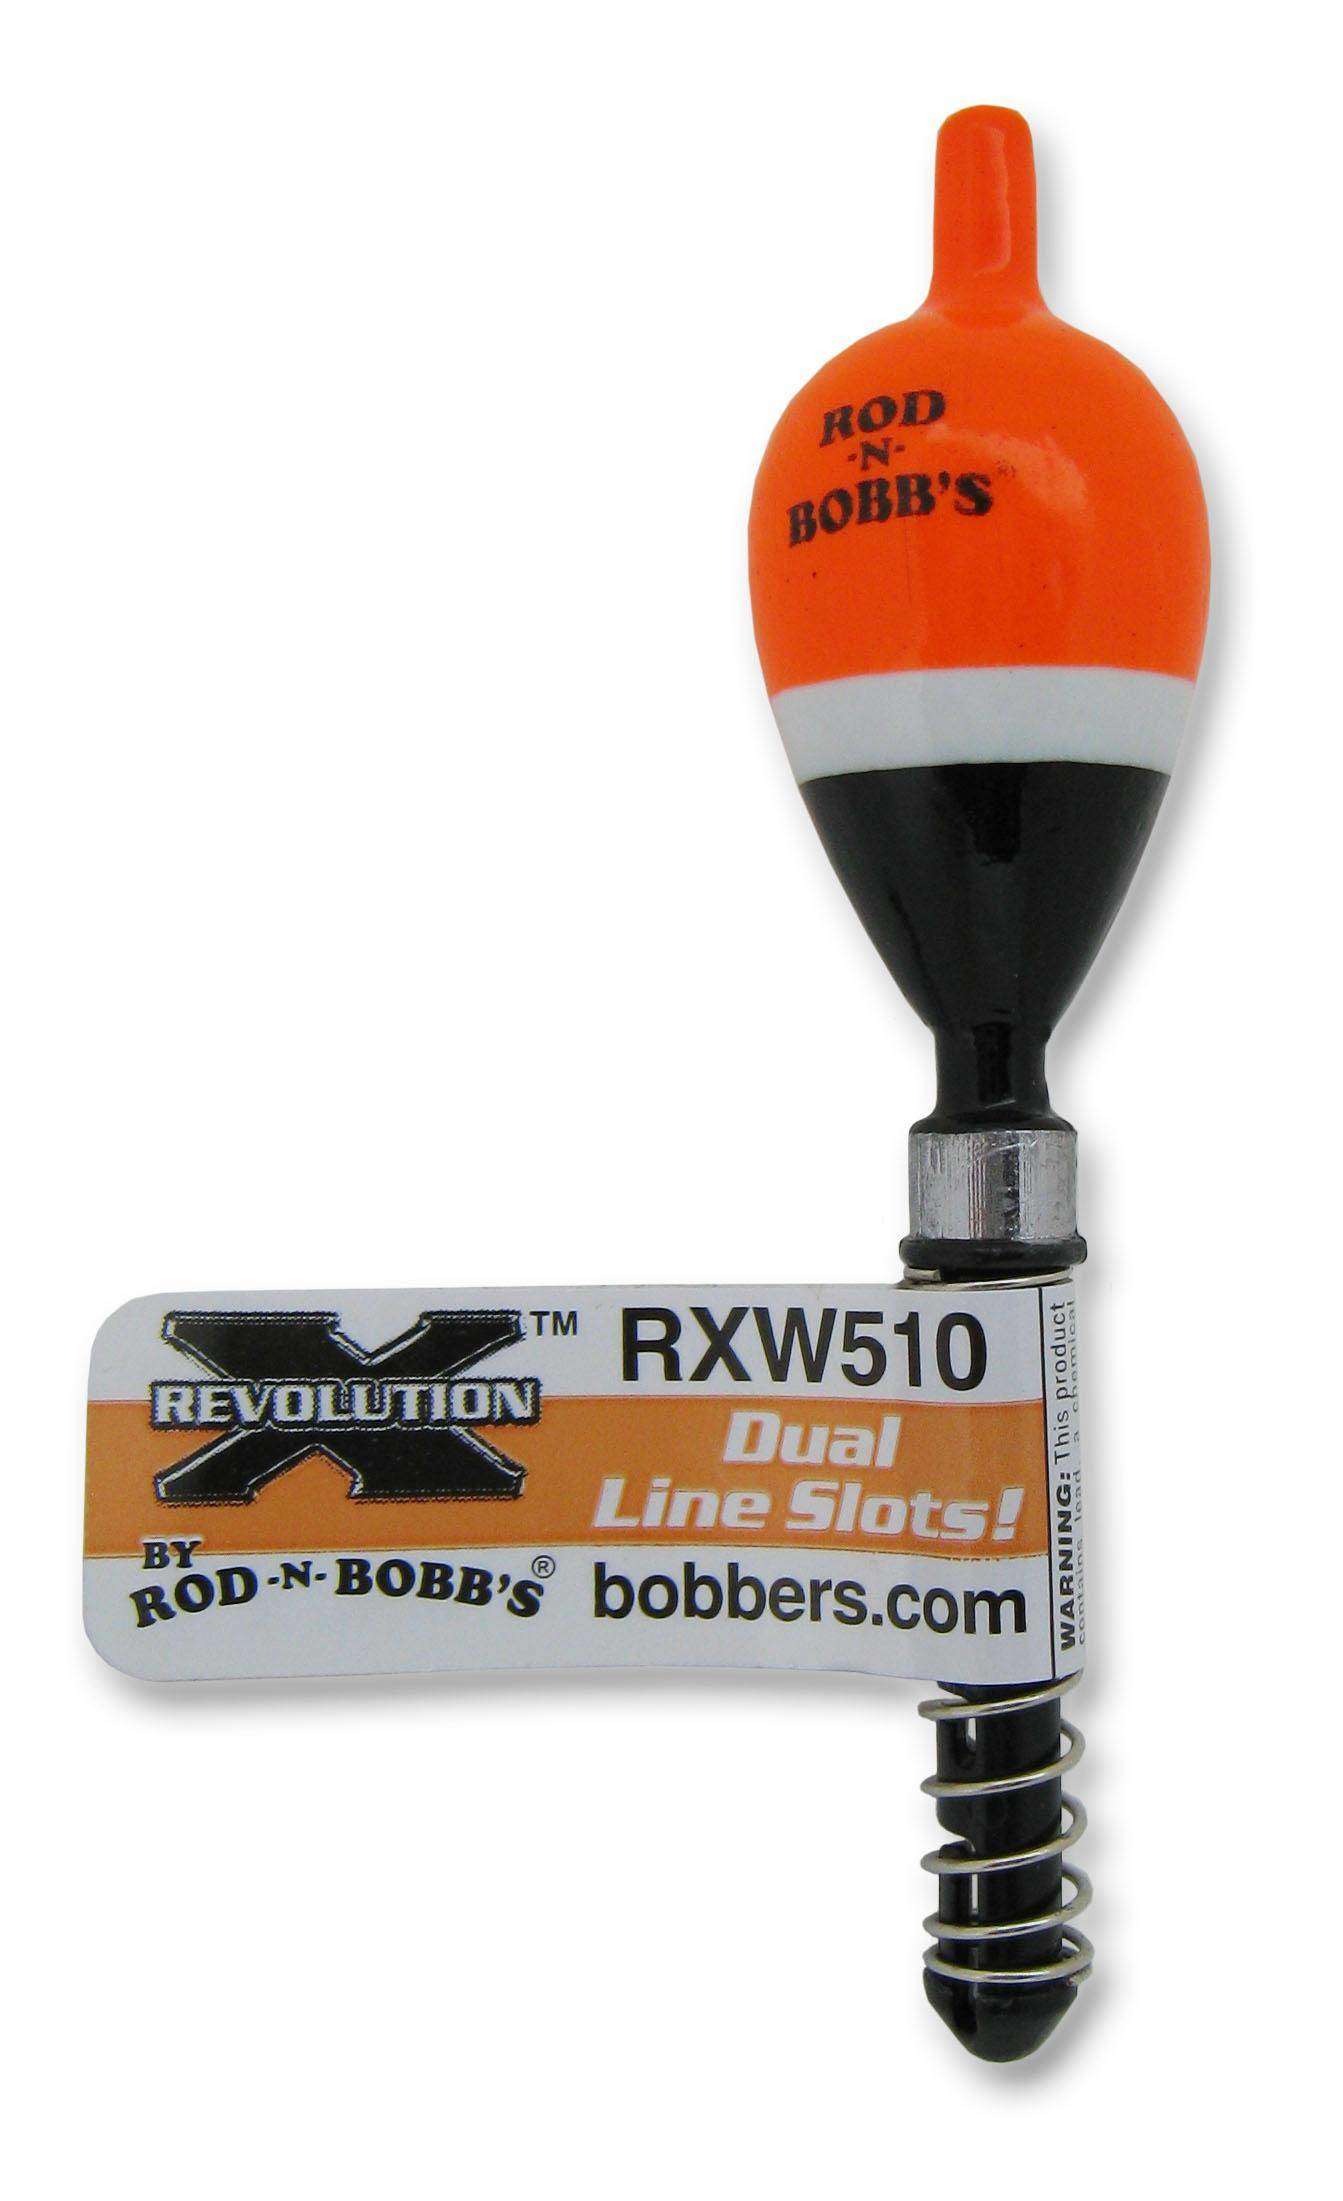 Rod-N-Bobb's 3-in-one Revolution x 1 inch Glow Oval Stick Bobber